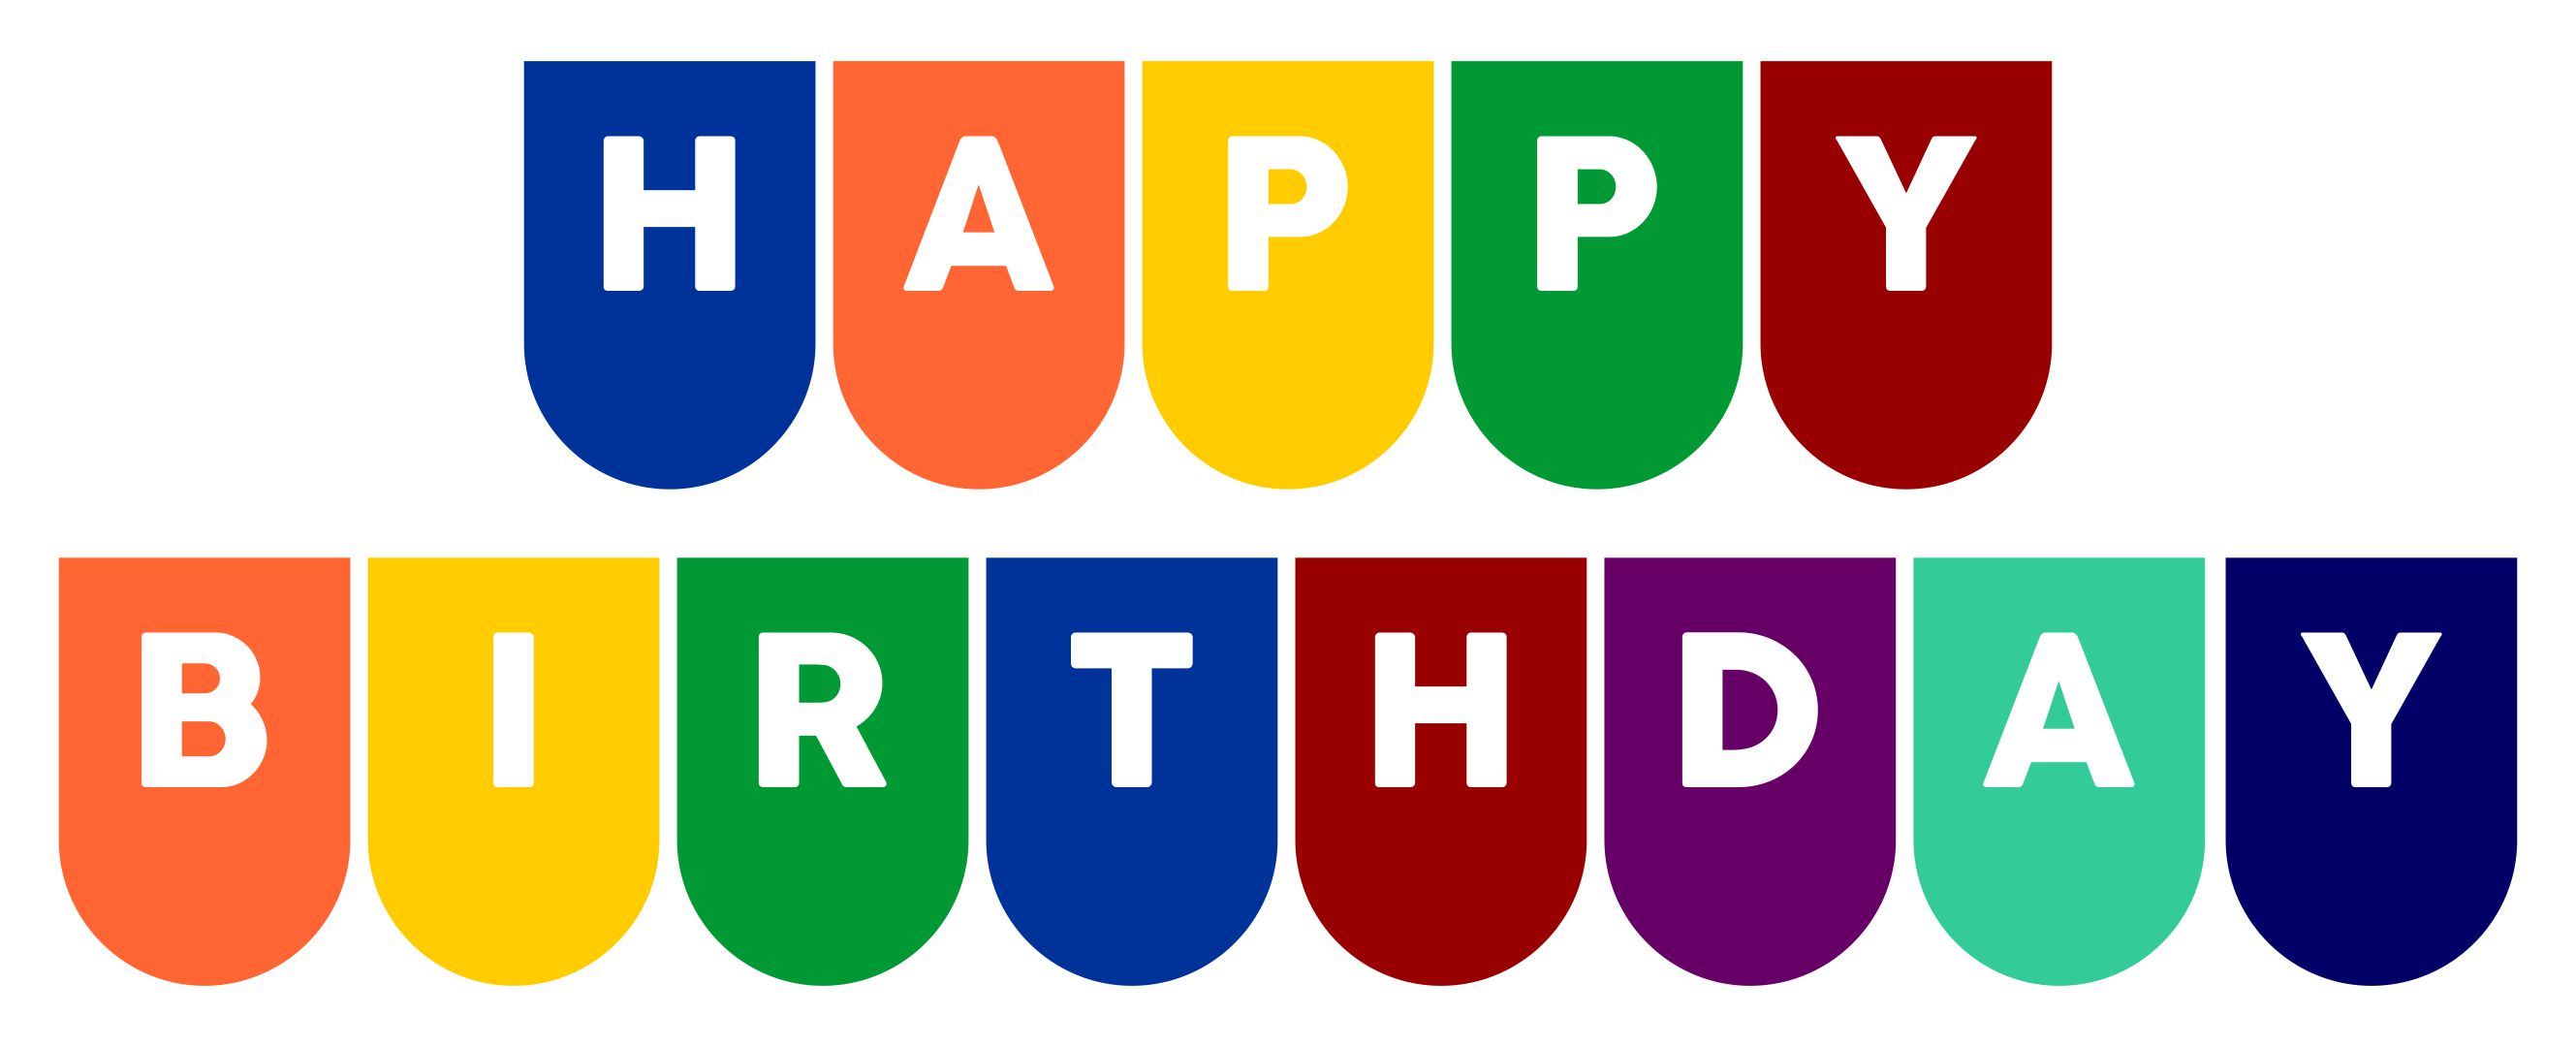 6-best-images-of-happy-birthday-printable-banners-signs-free-printable-happy-birthday-banner